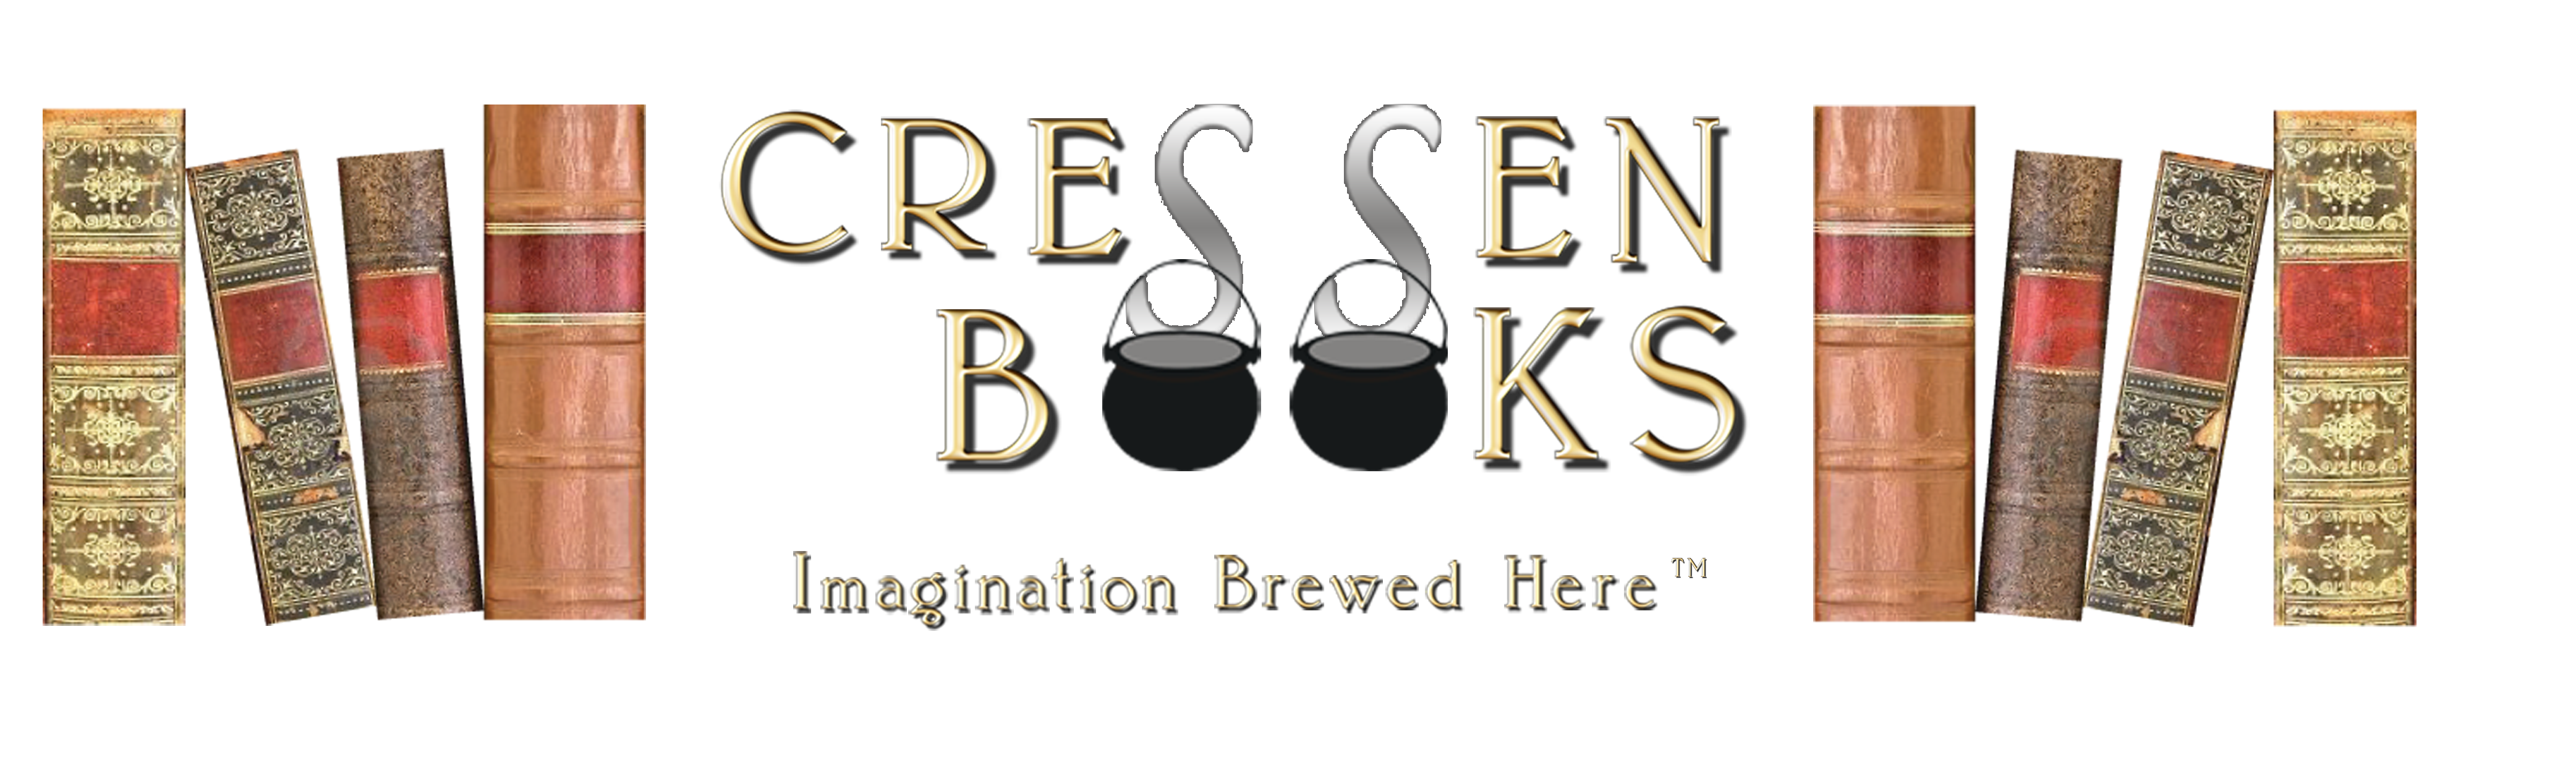 cressen books logo and motto